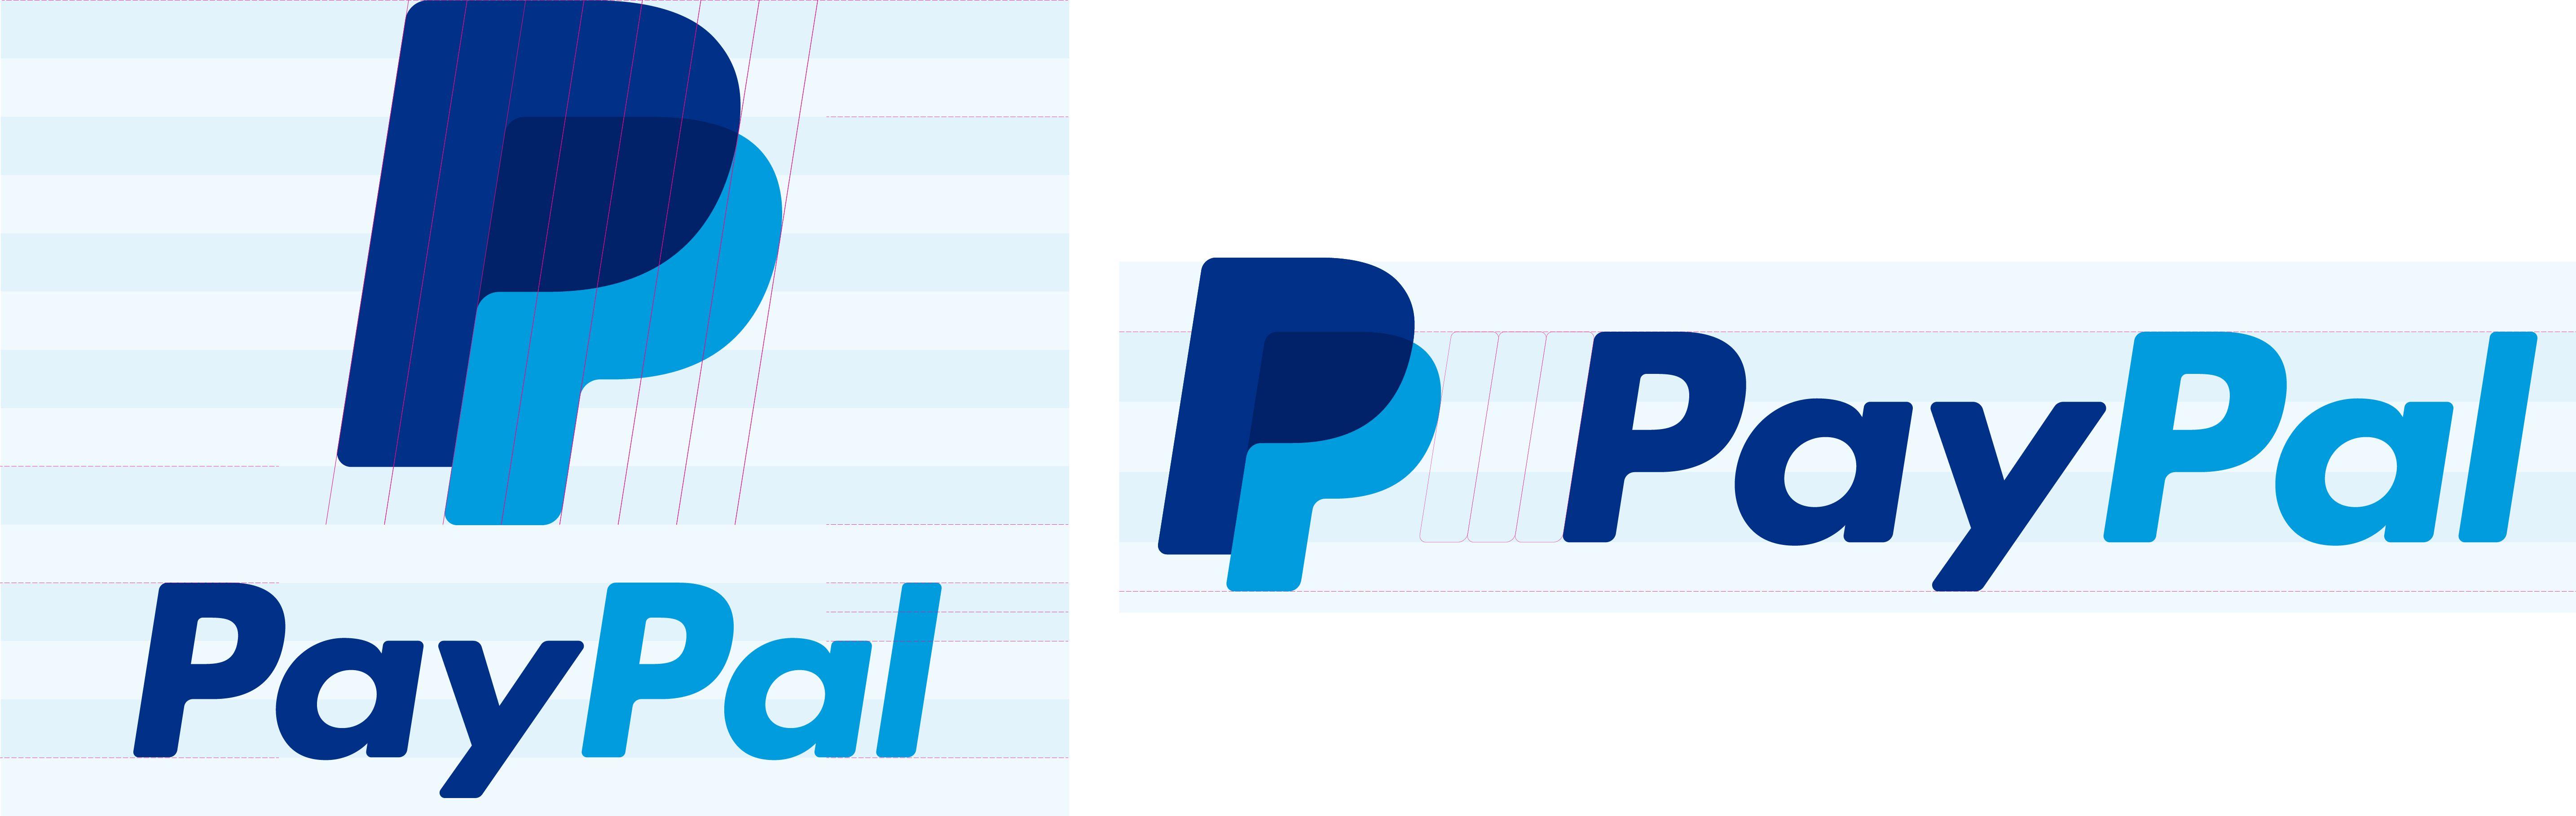 original paypal logo